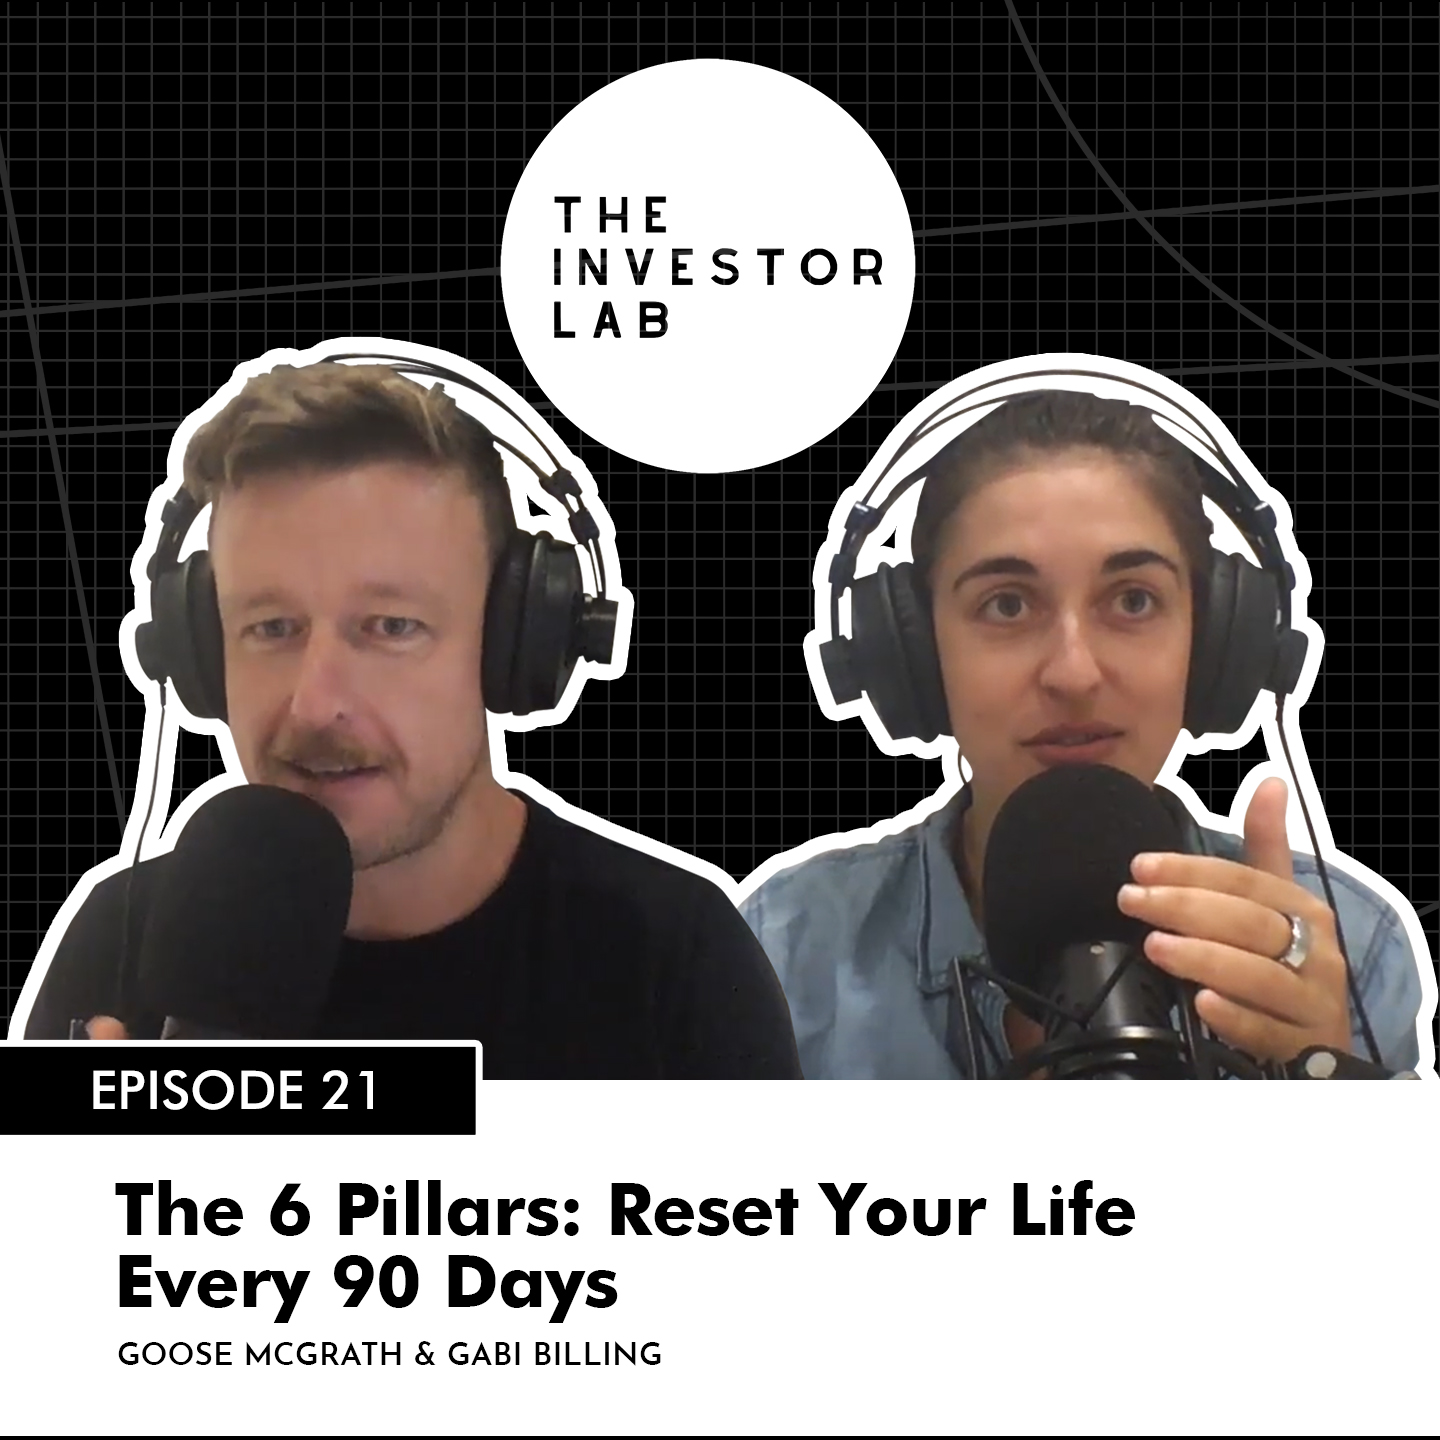 The 6 Pillars: Reset Your Life Every 90 Days